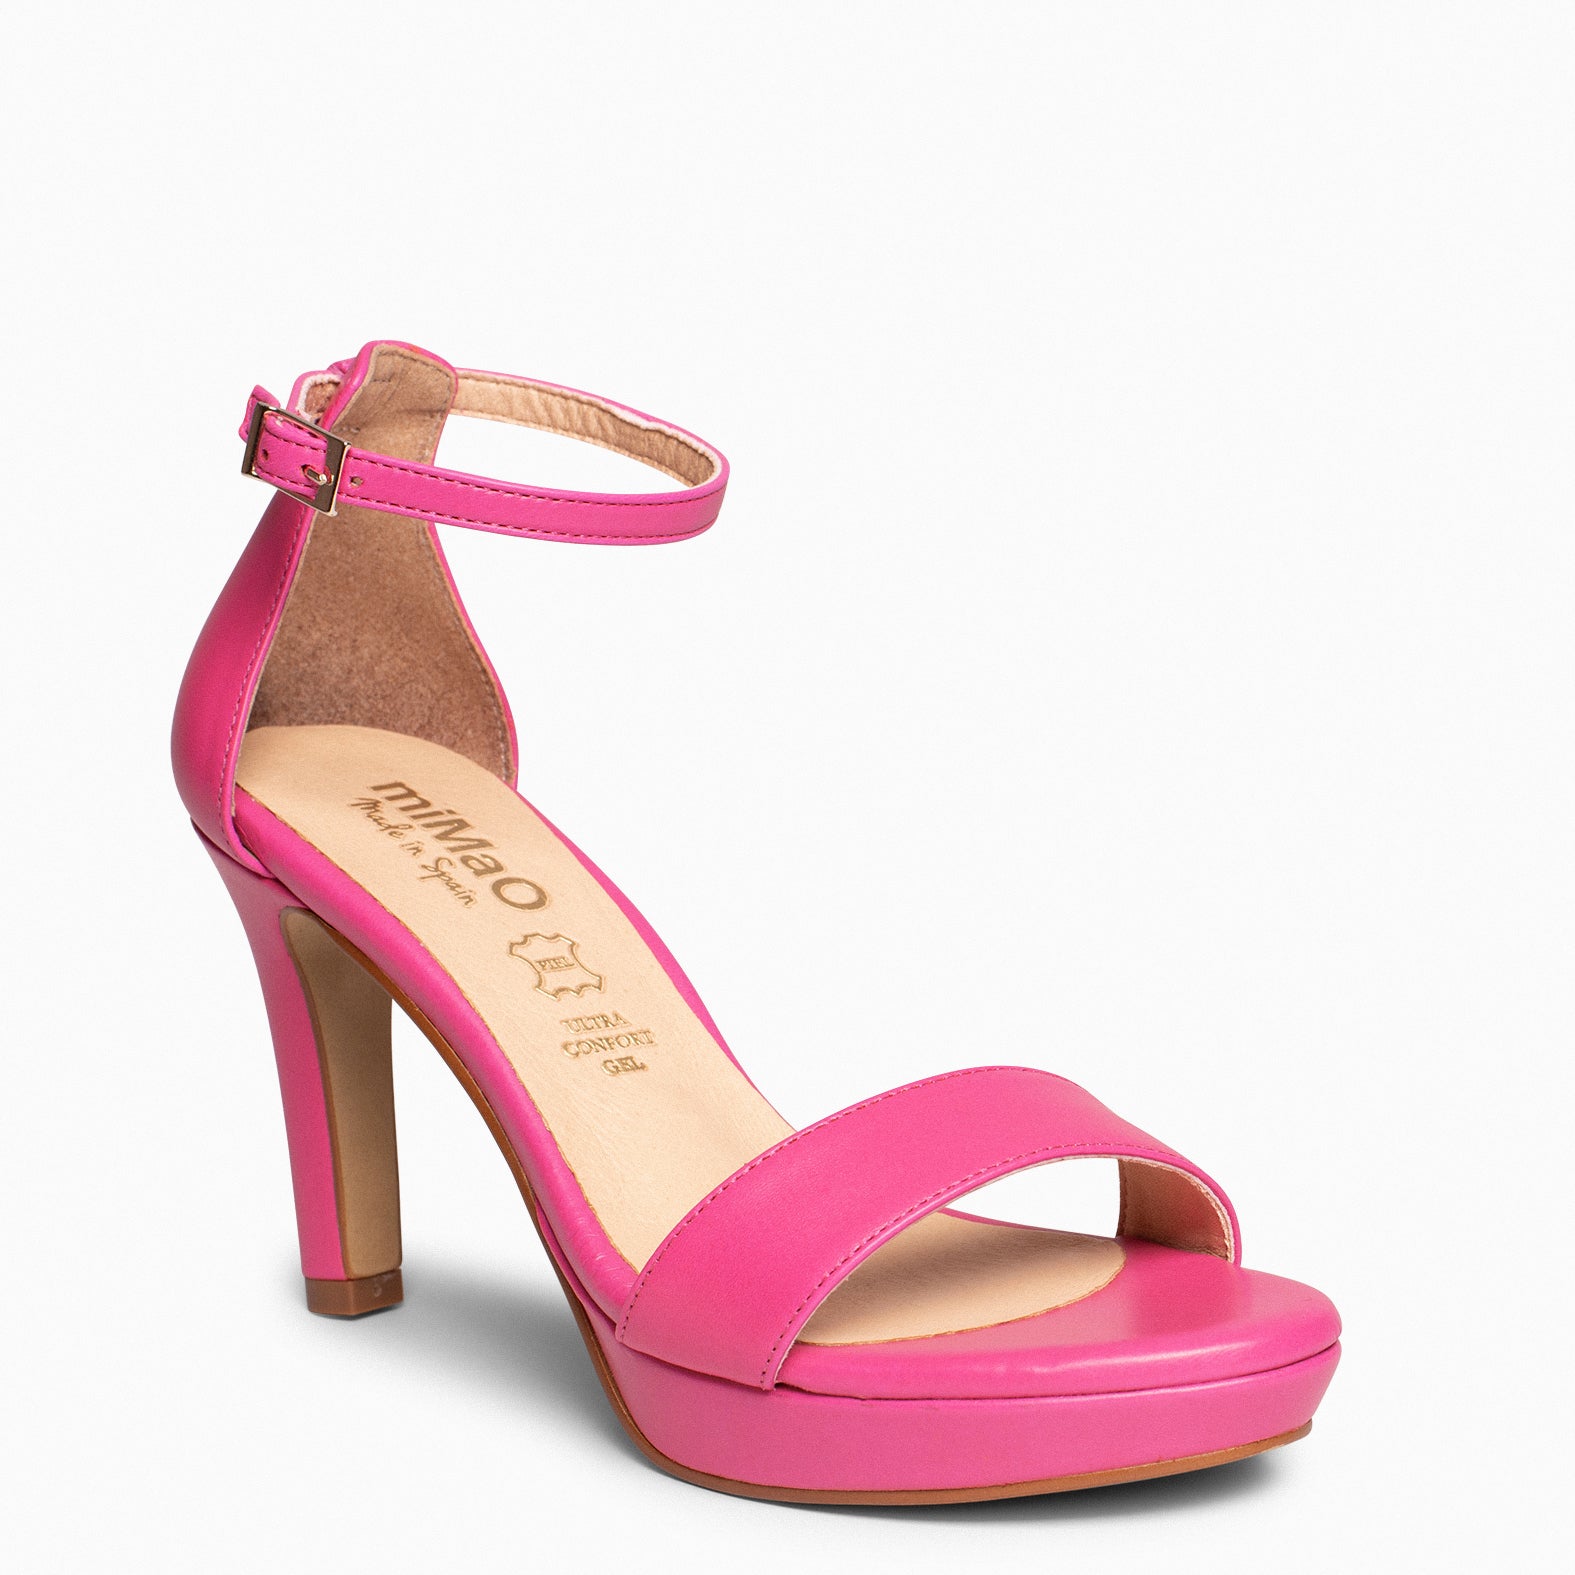 PARTY – FUCHSIA high-heeled platform sandals